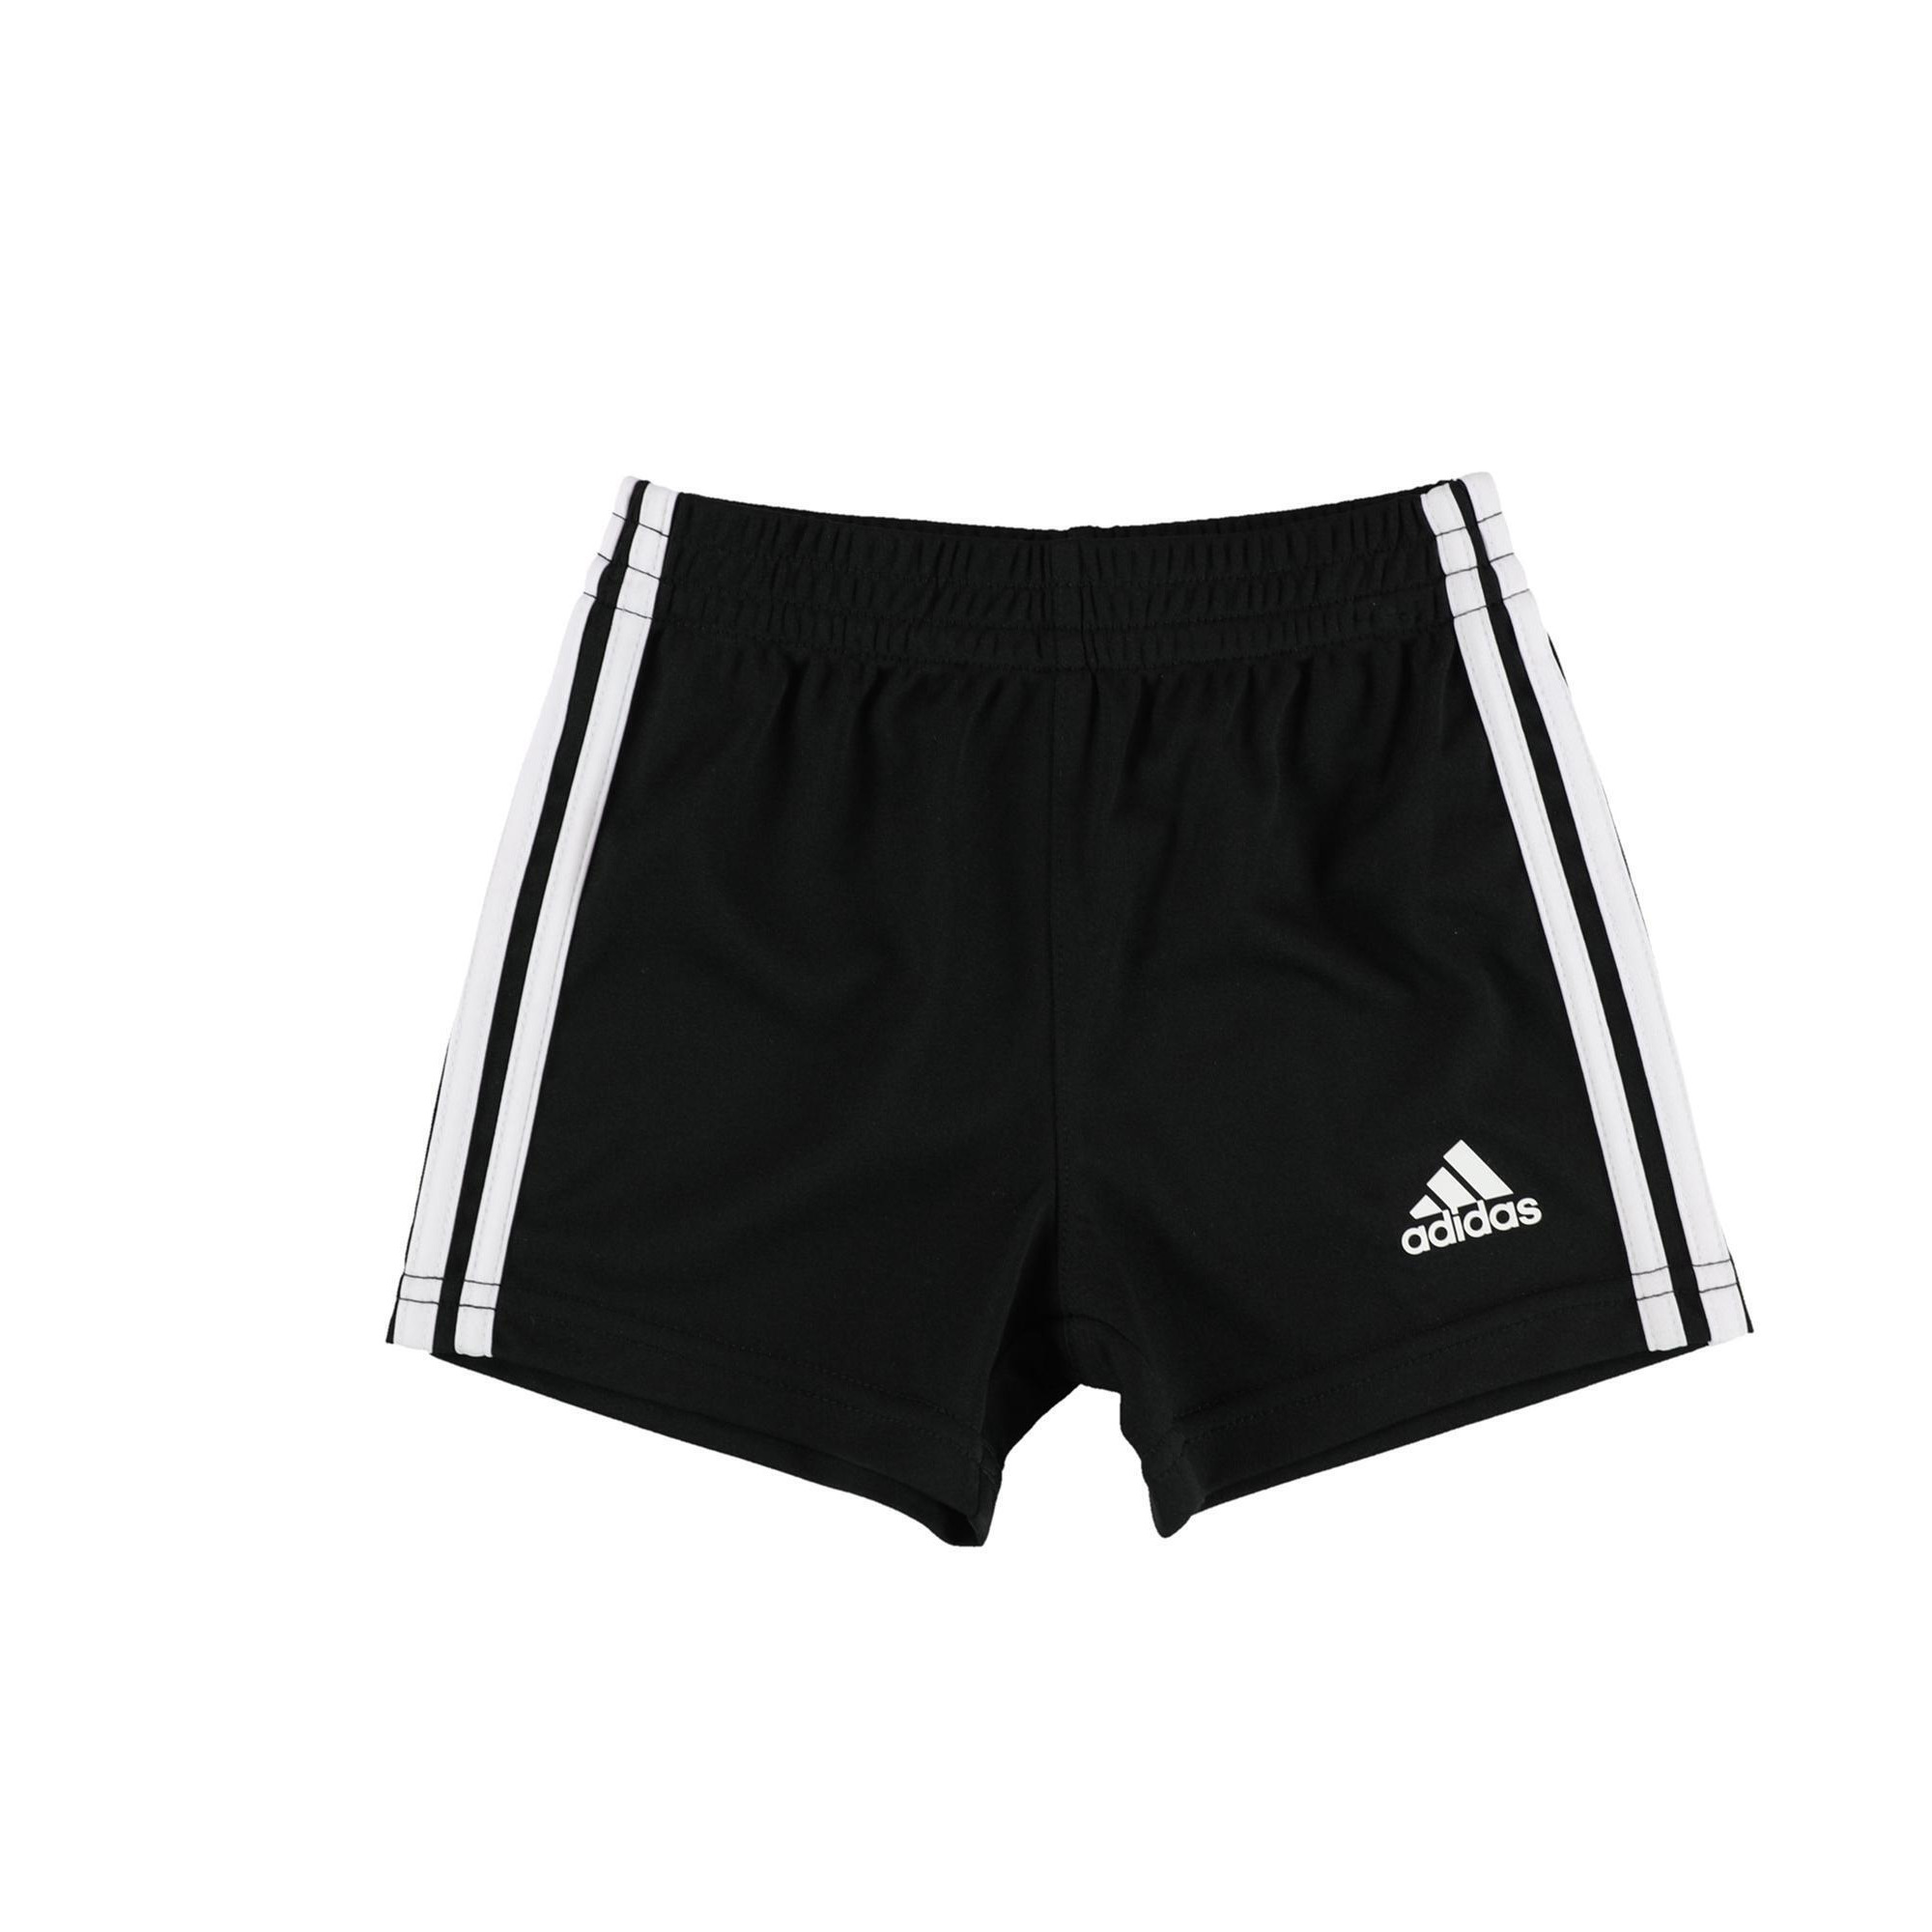 Adidas Boys Two Tone Athletic Walking Shorts, Style # AG6285N-B alternate image